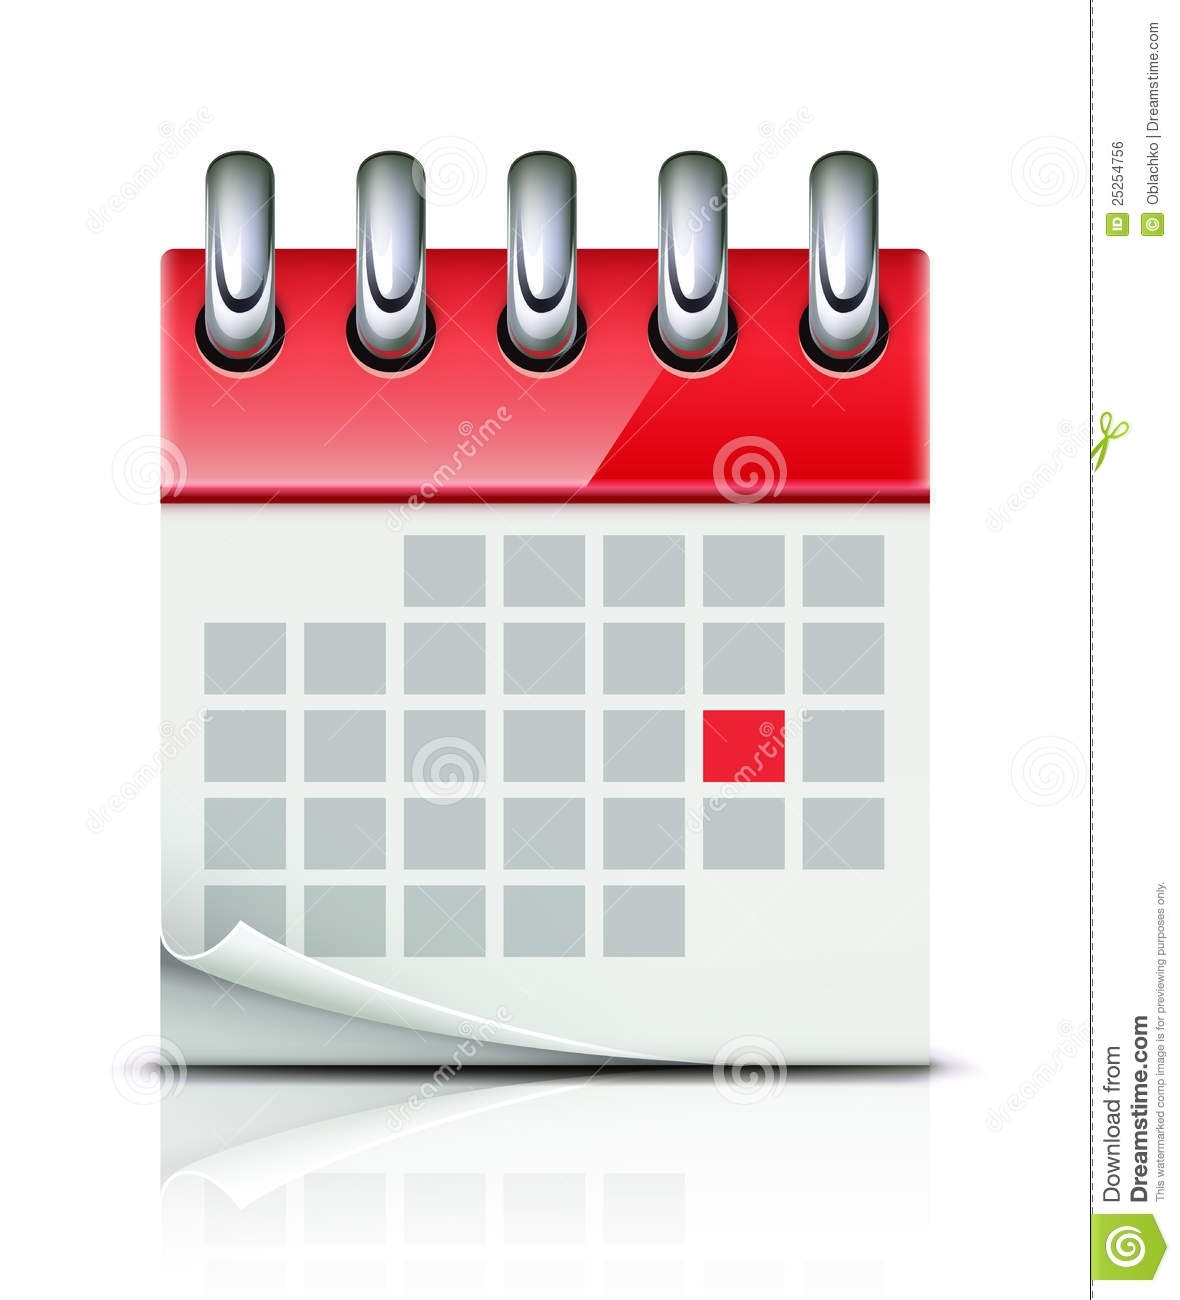 Calendar Icon Stock Vector. Illustration Of Deadline - 25254756 Calendar Icon Royalty Free